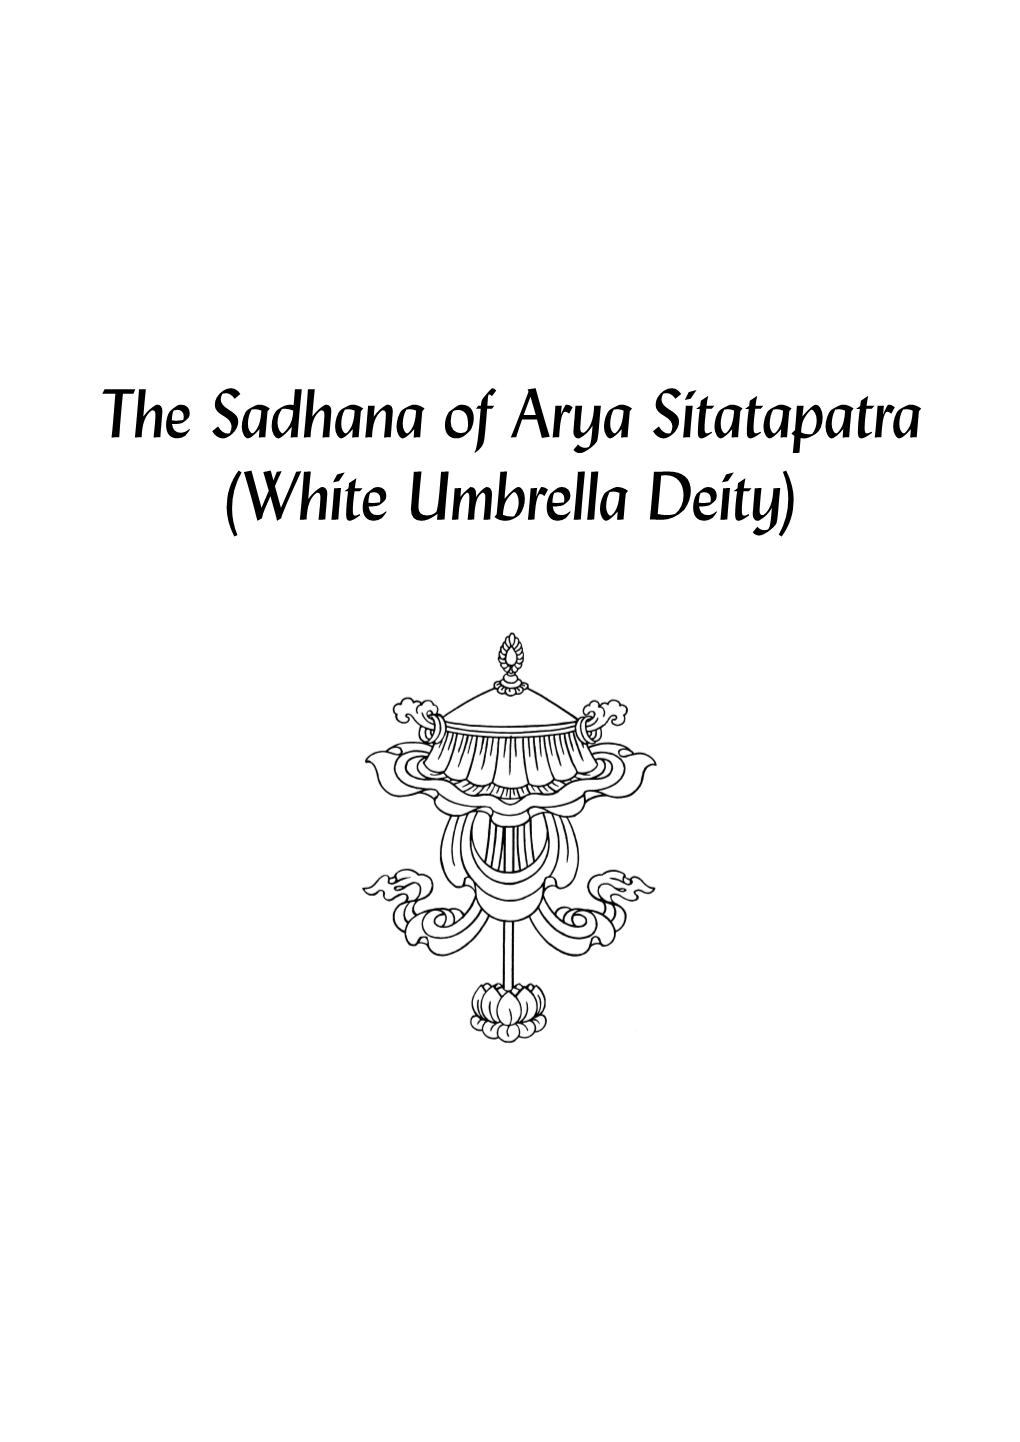 White Umbrella Deity Sadhana